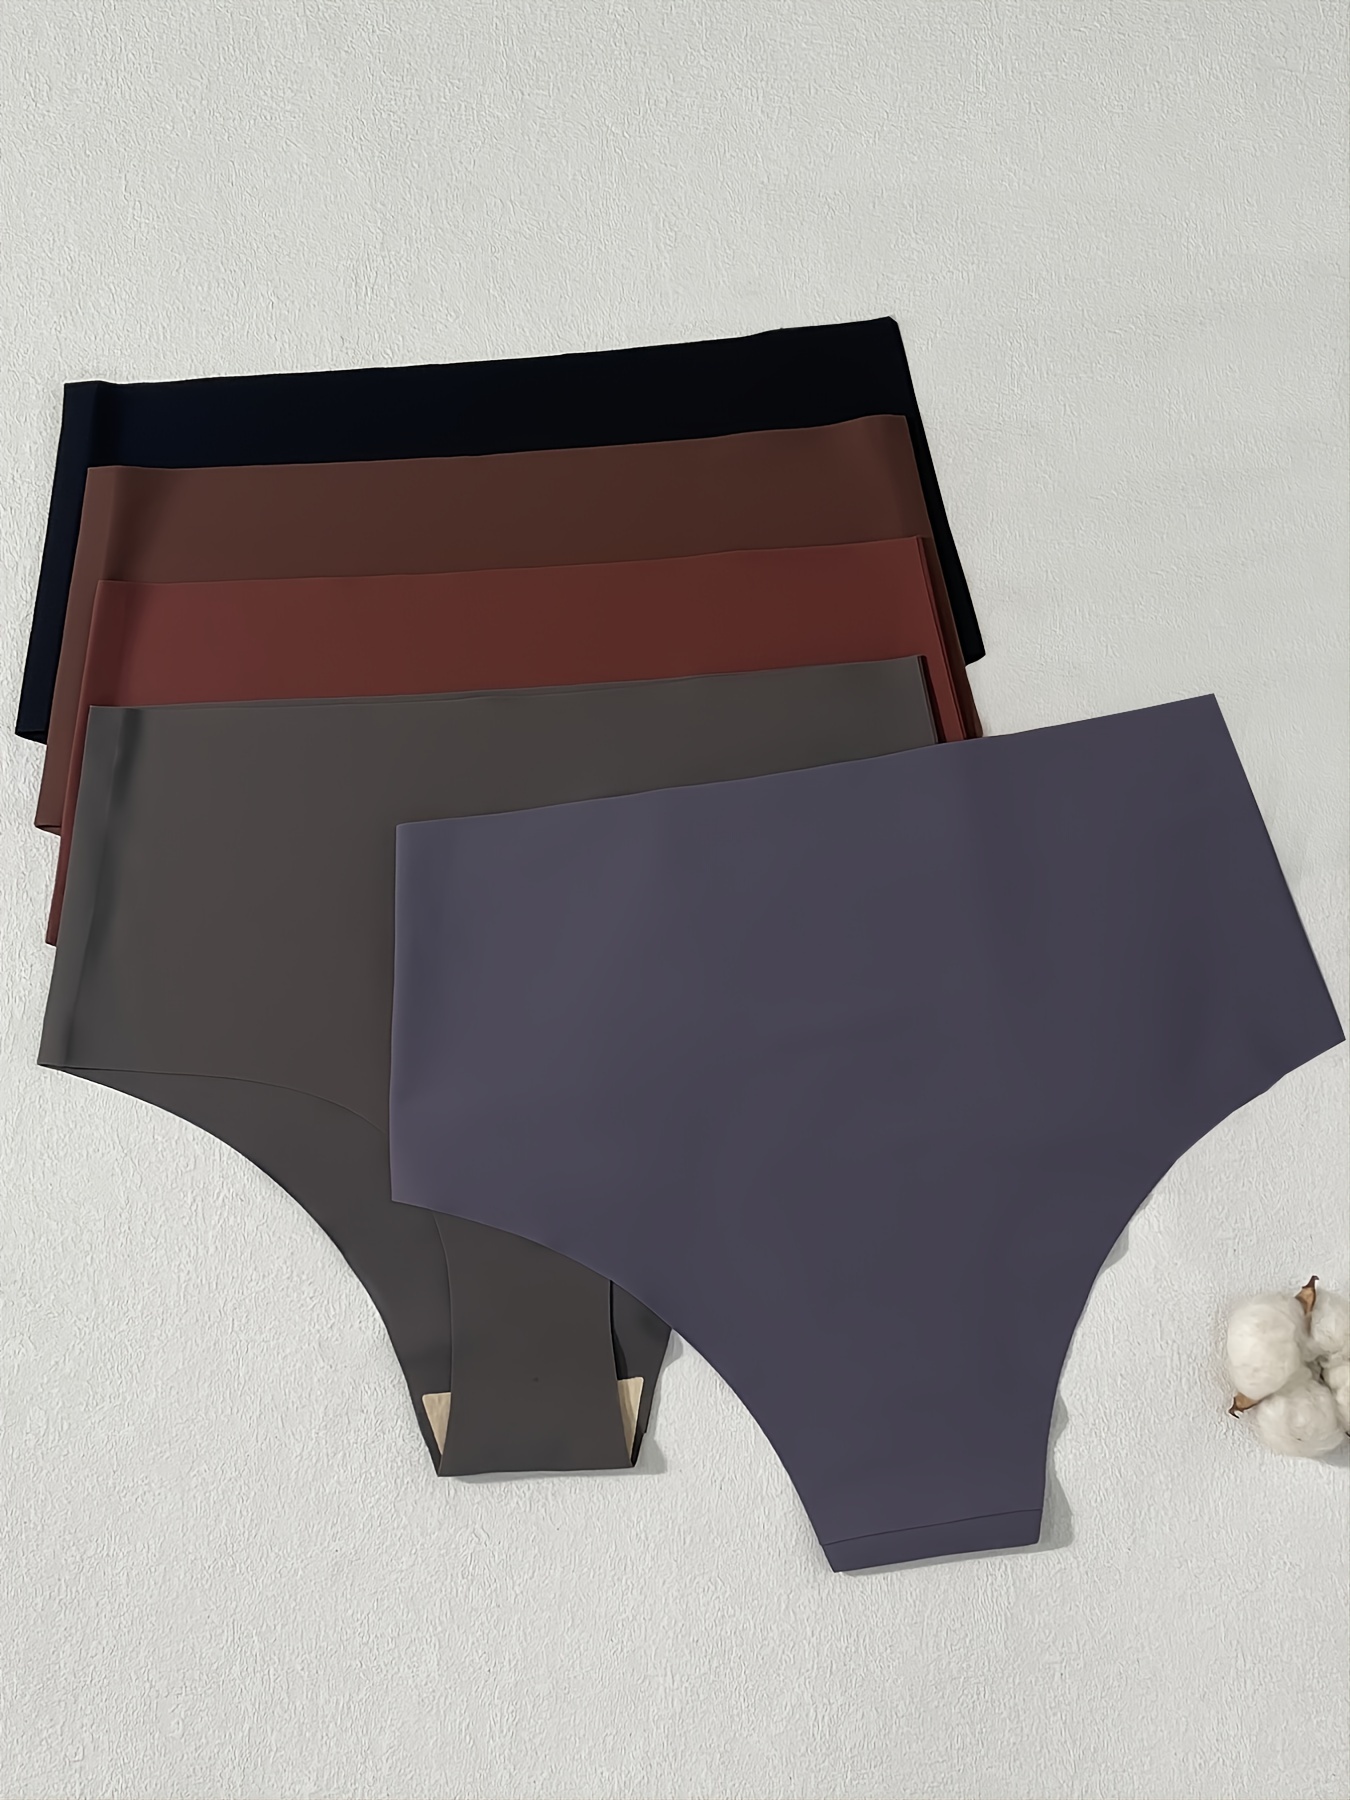 Calvin Klein High-Waisted Panties for Women